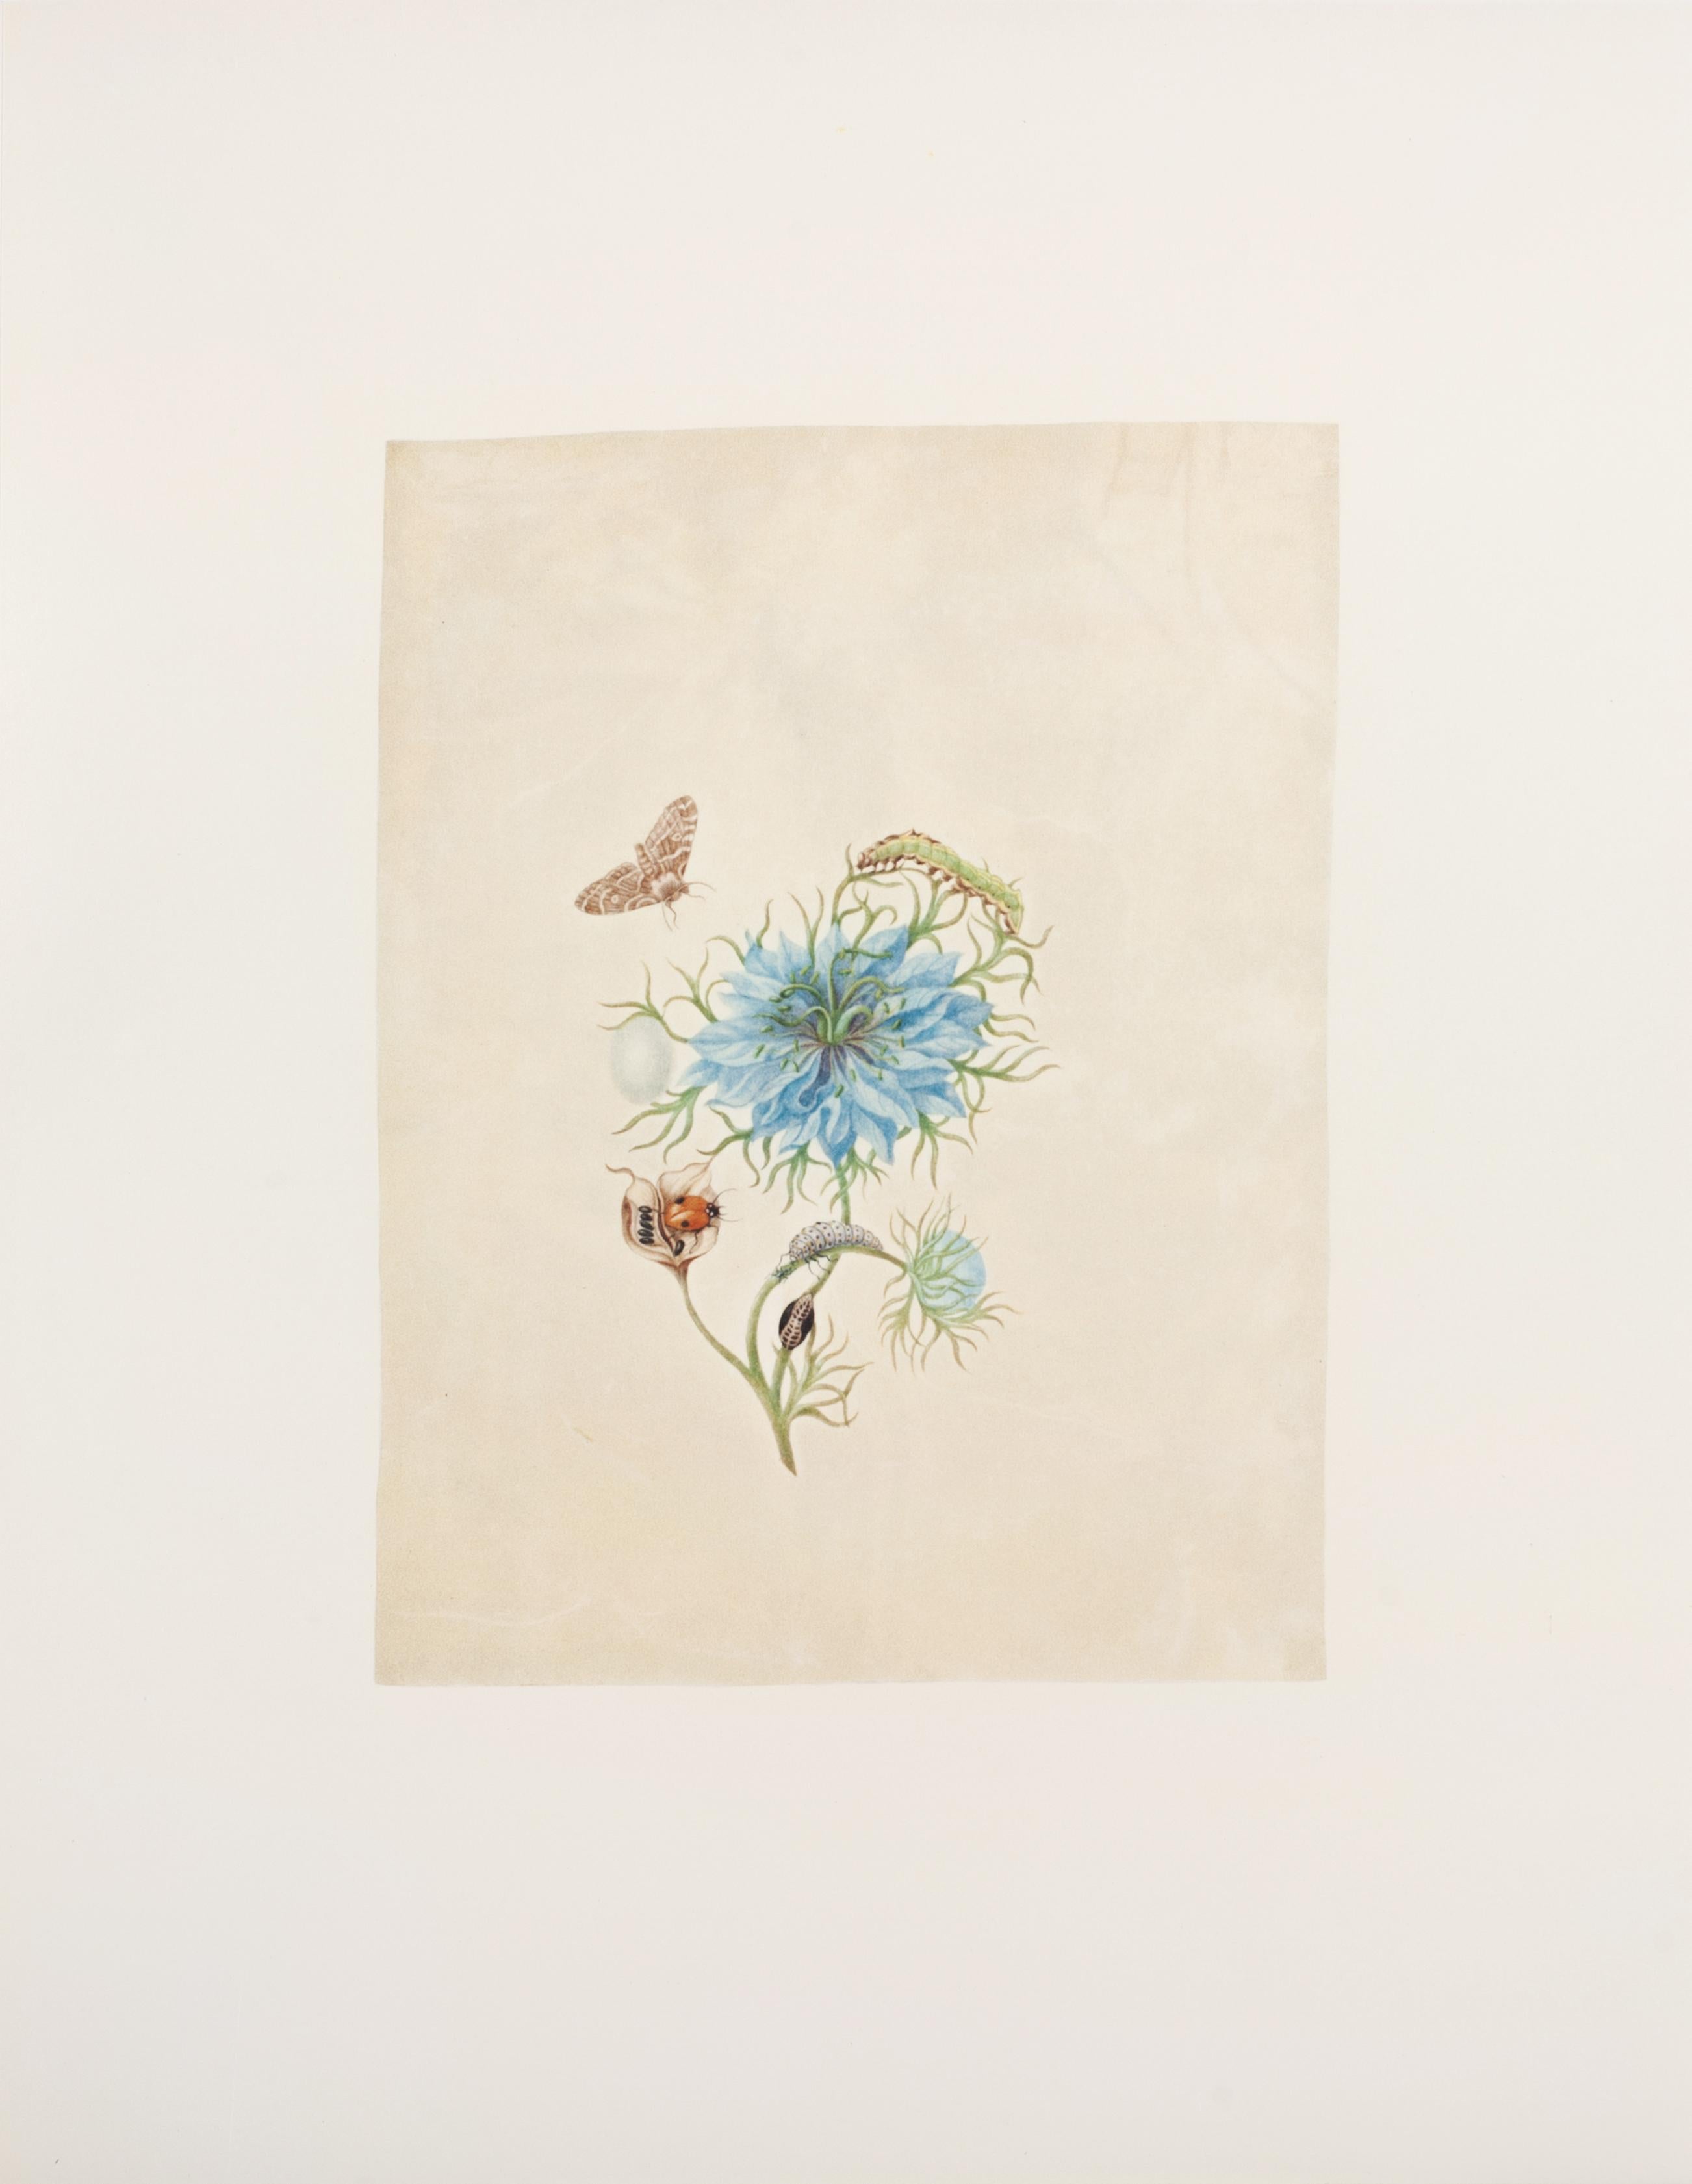 40. Fennel flower, Iron Prominent - Print by Maria Sybilla Merian